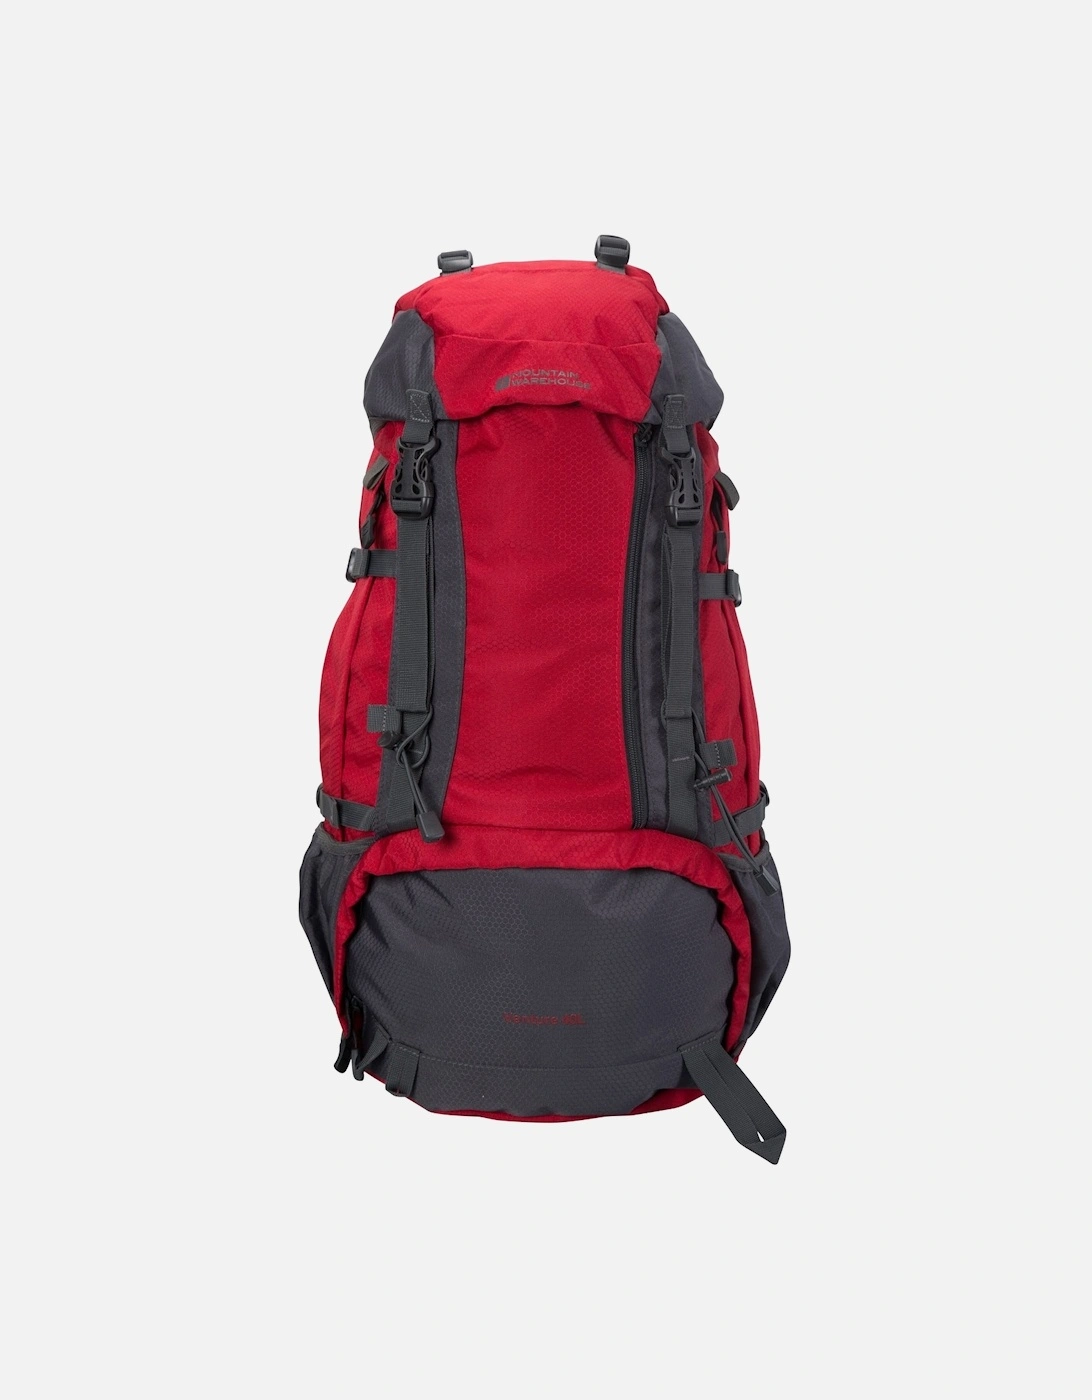 Venture Backpack, 6 of 5